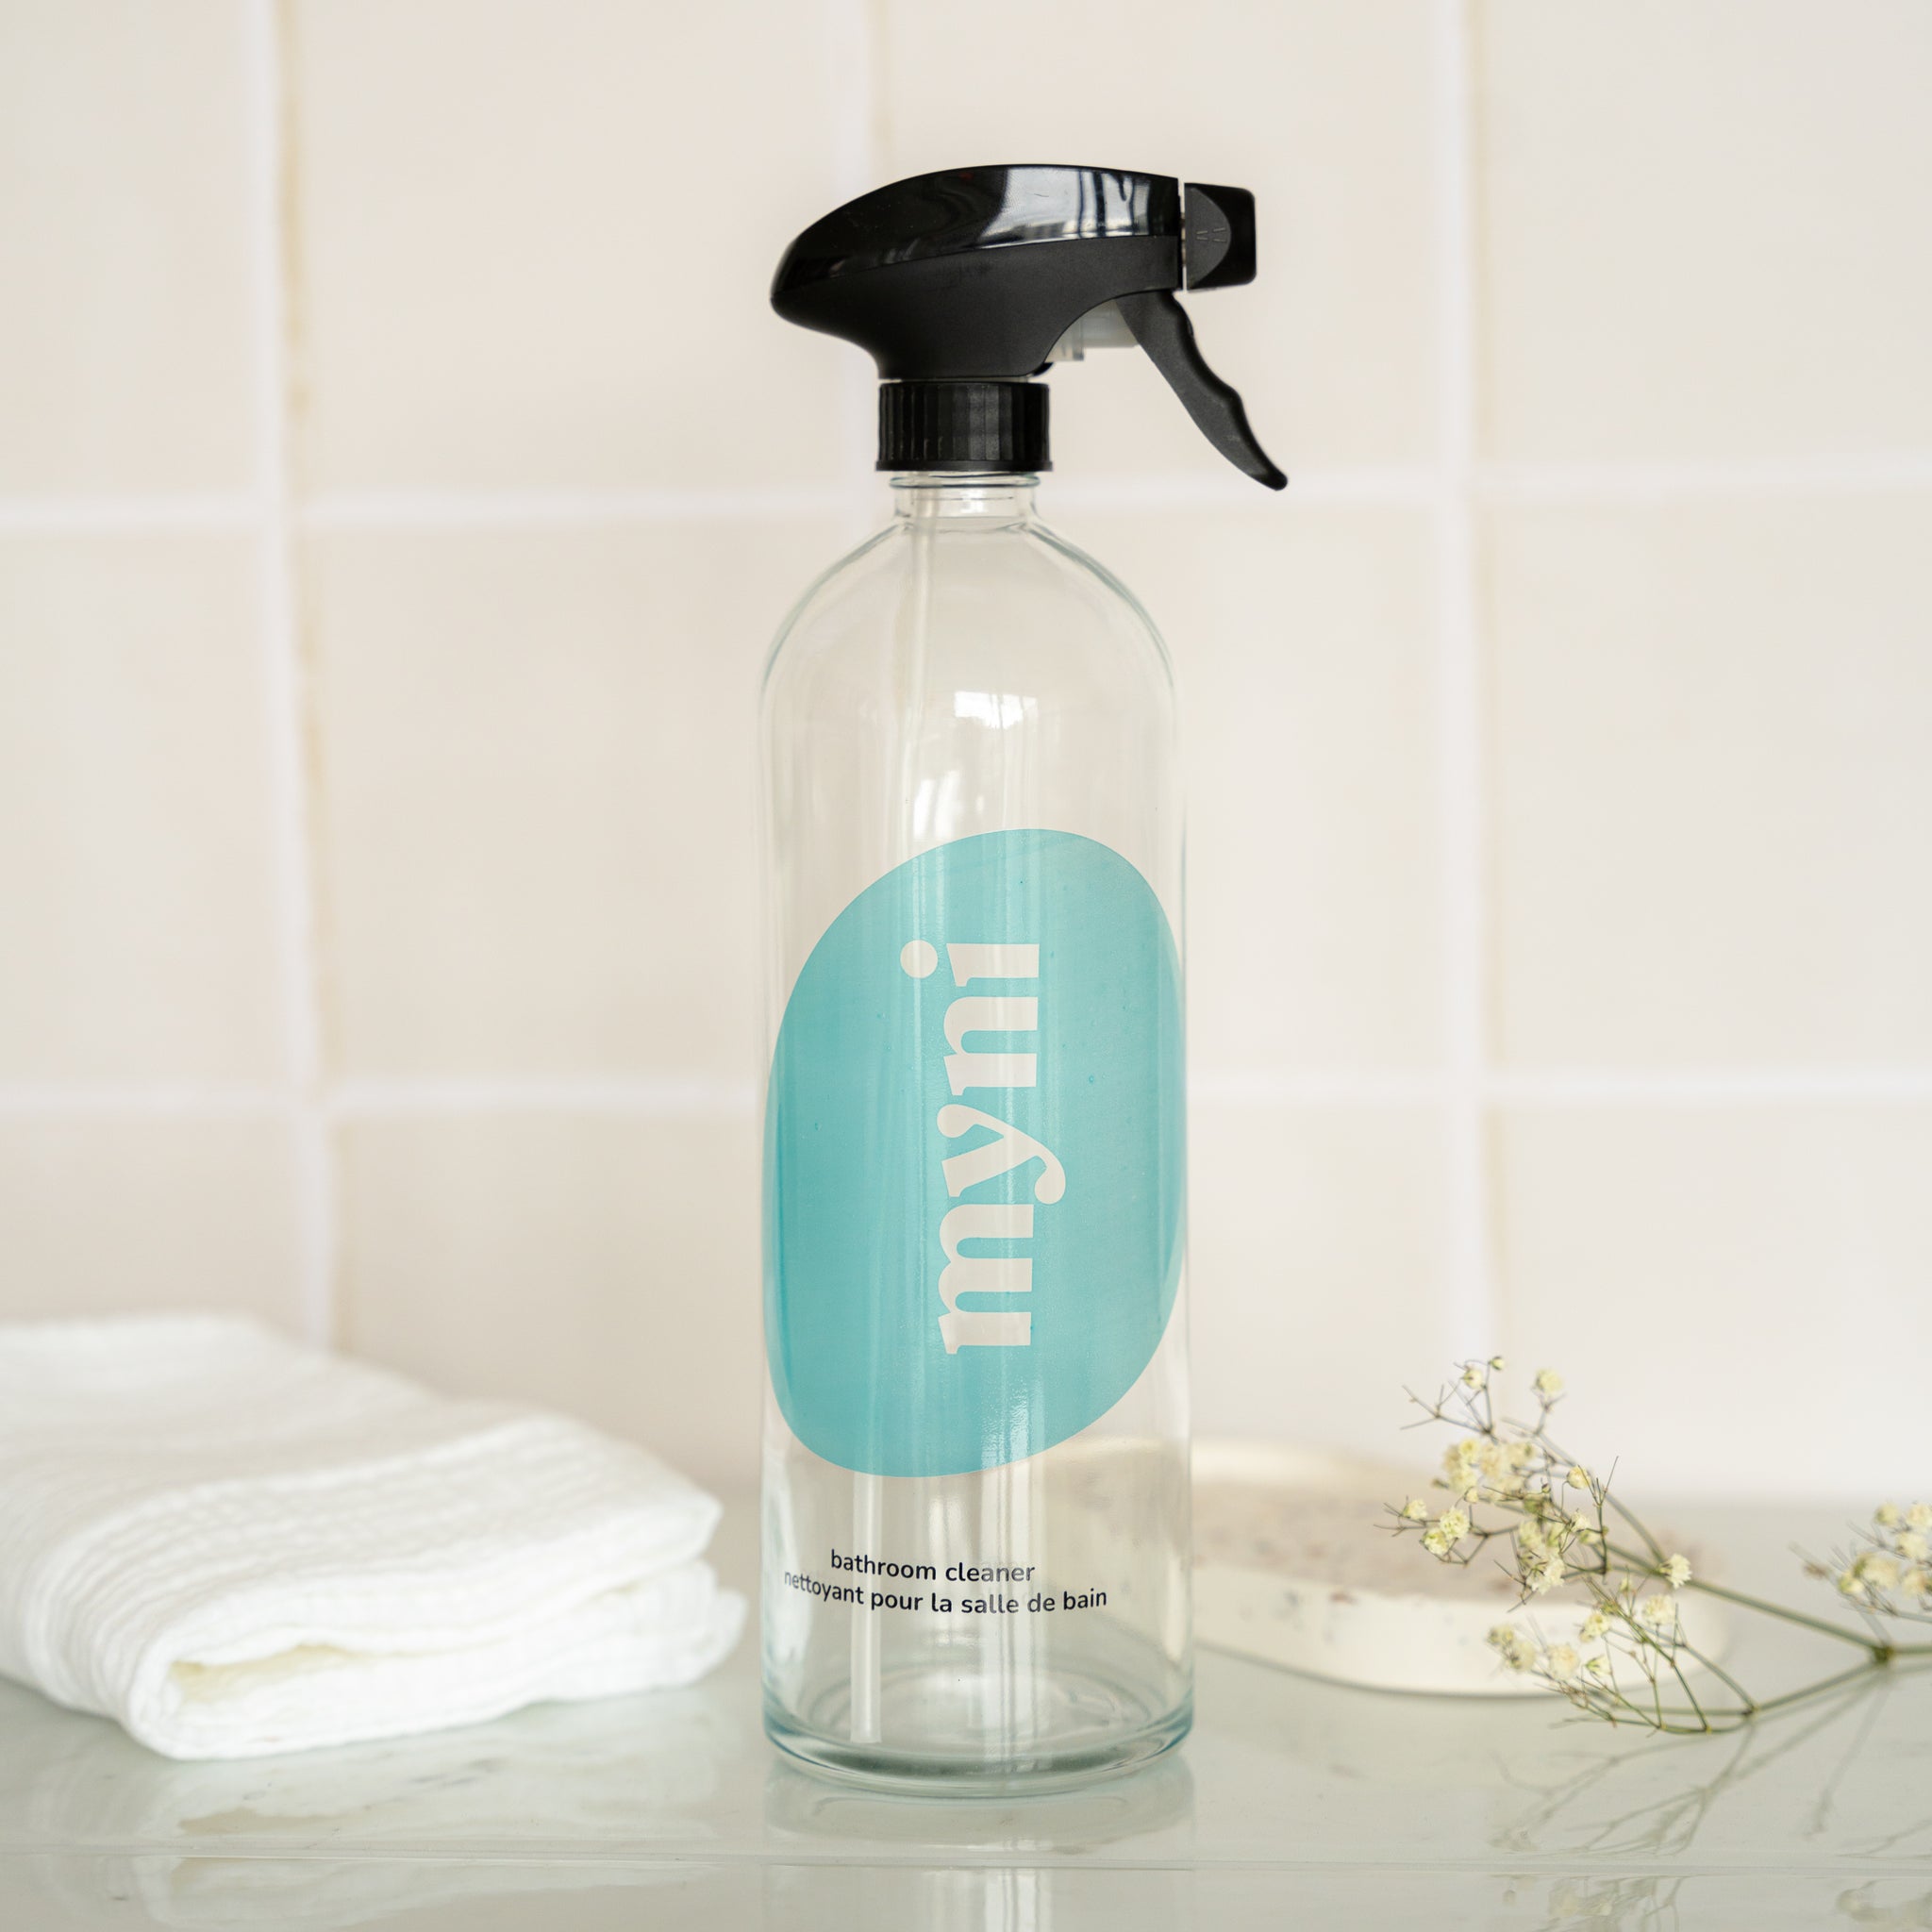 bathroom cleaner bottle in glass